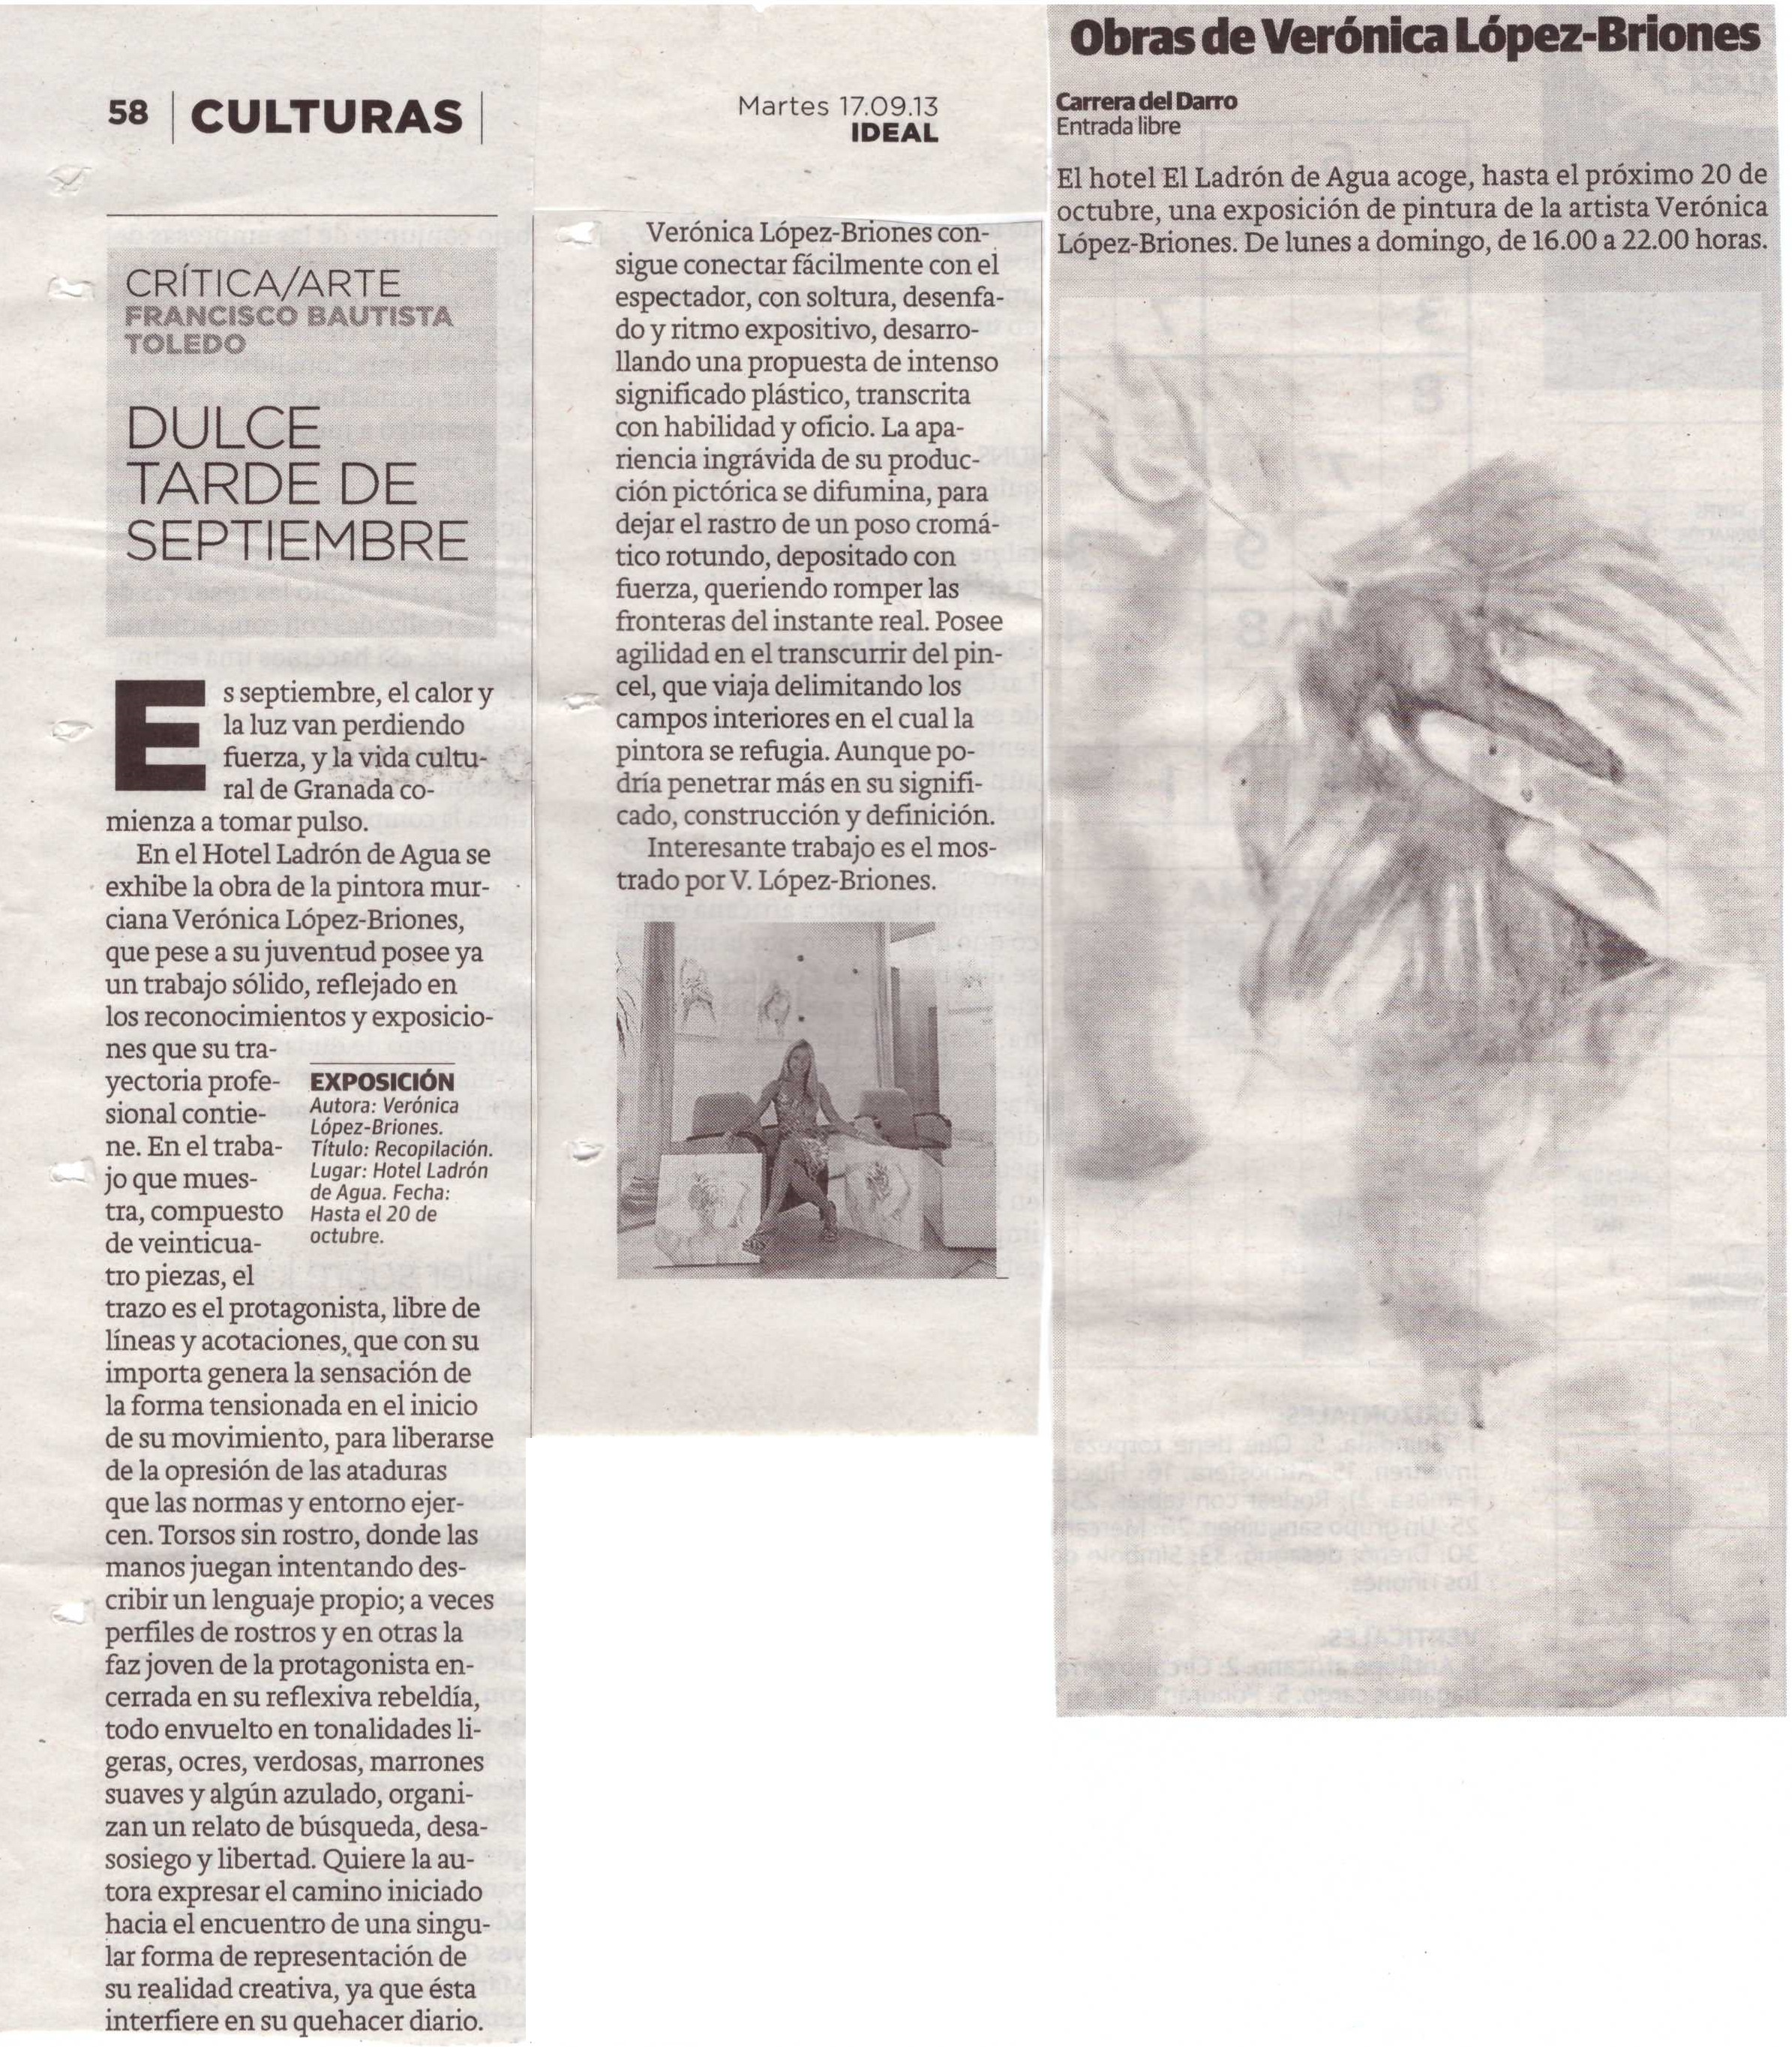 Art review of Exhibition by Verónica López Briones